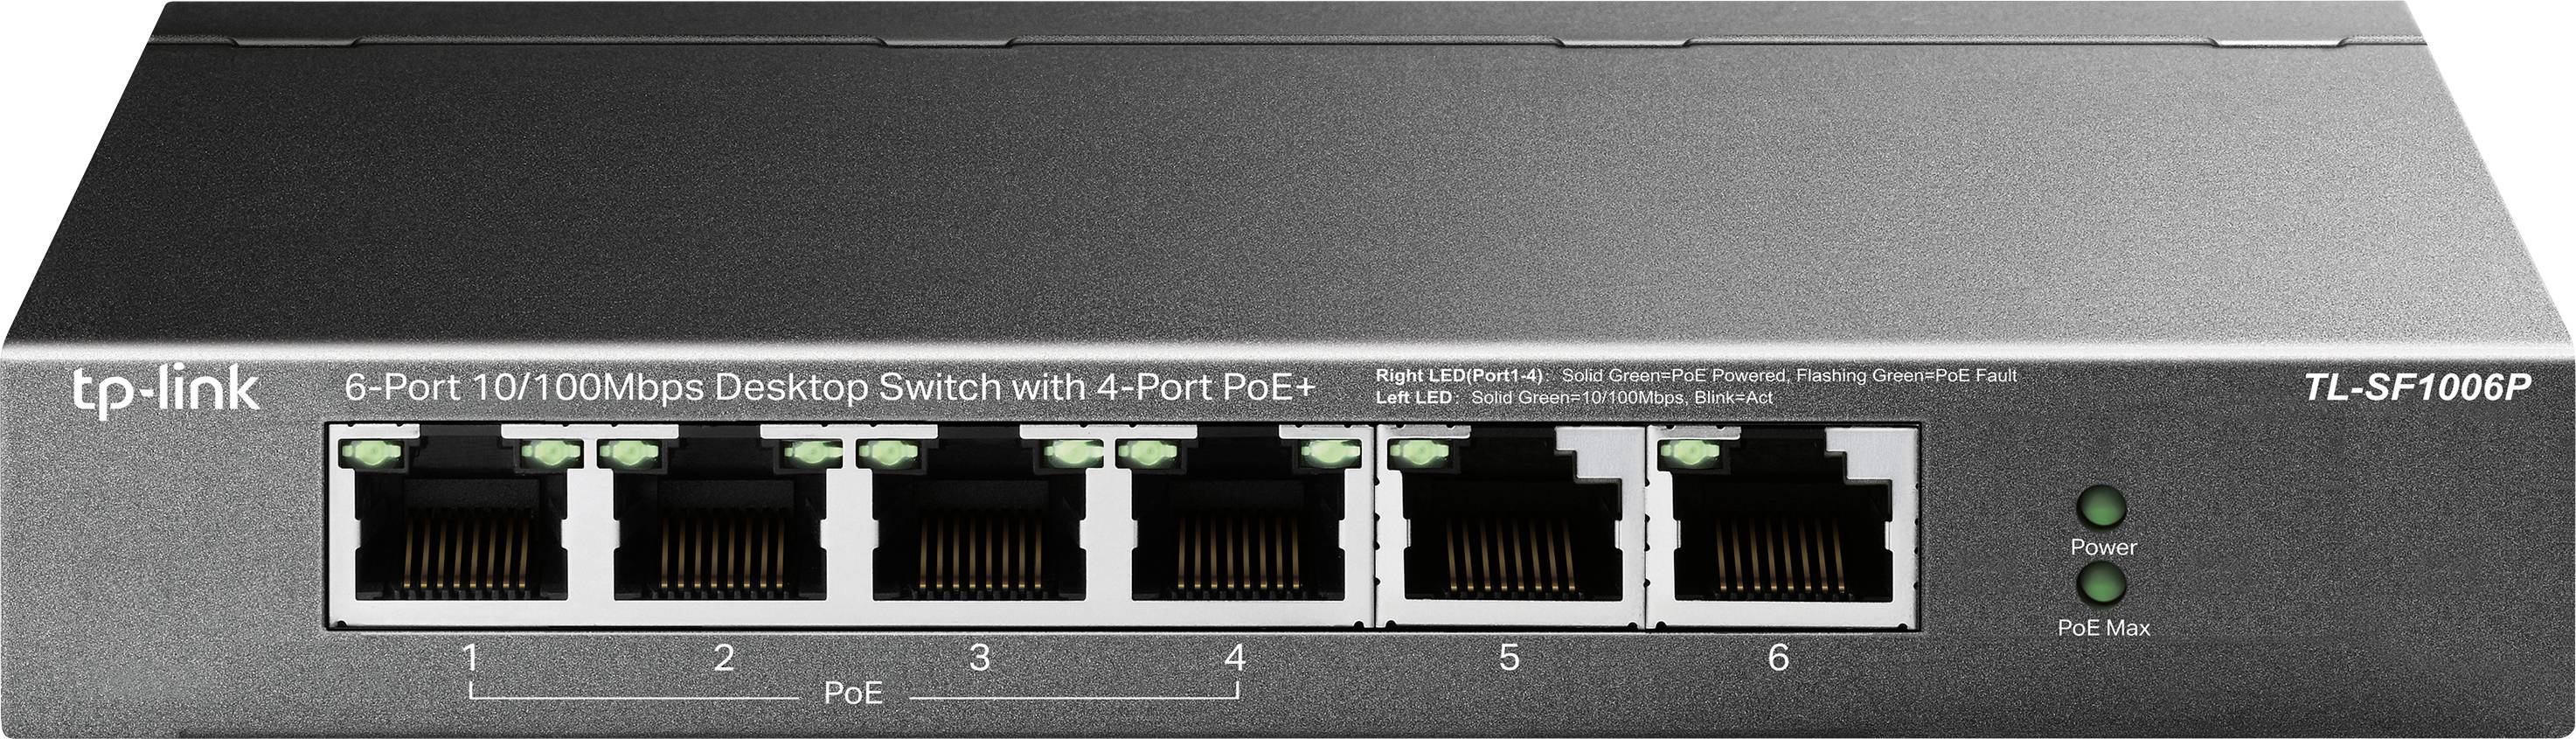 TP-LINK 6-Port 10/100 Mbps Desktop Switch with 4-Port PoE+ 67 W PoE Power, Desktop Steel Case